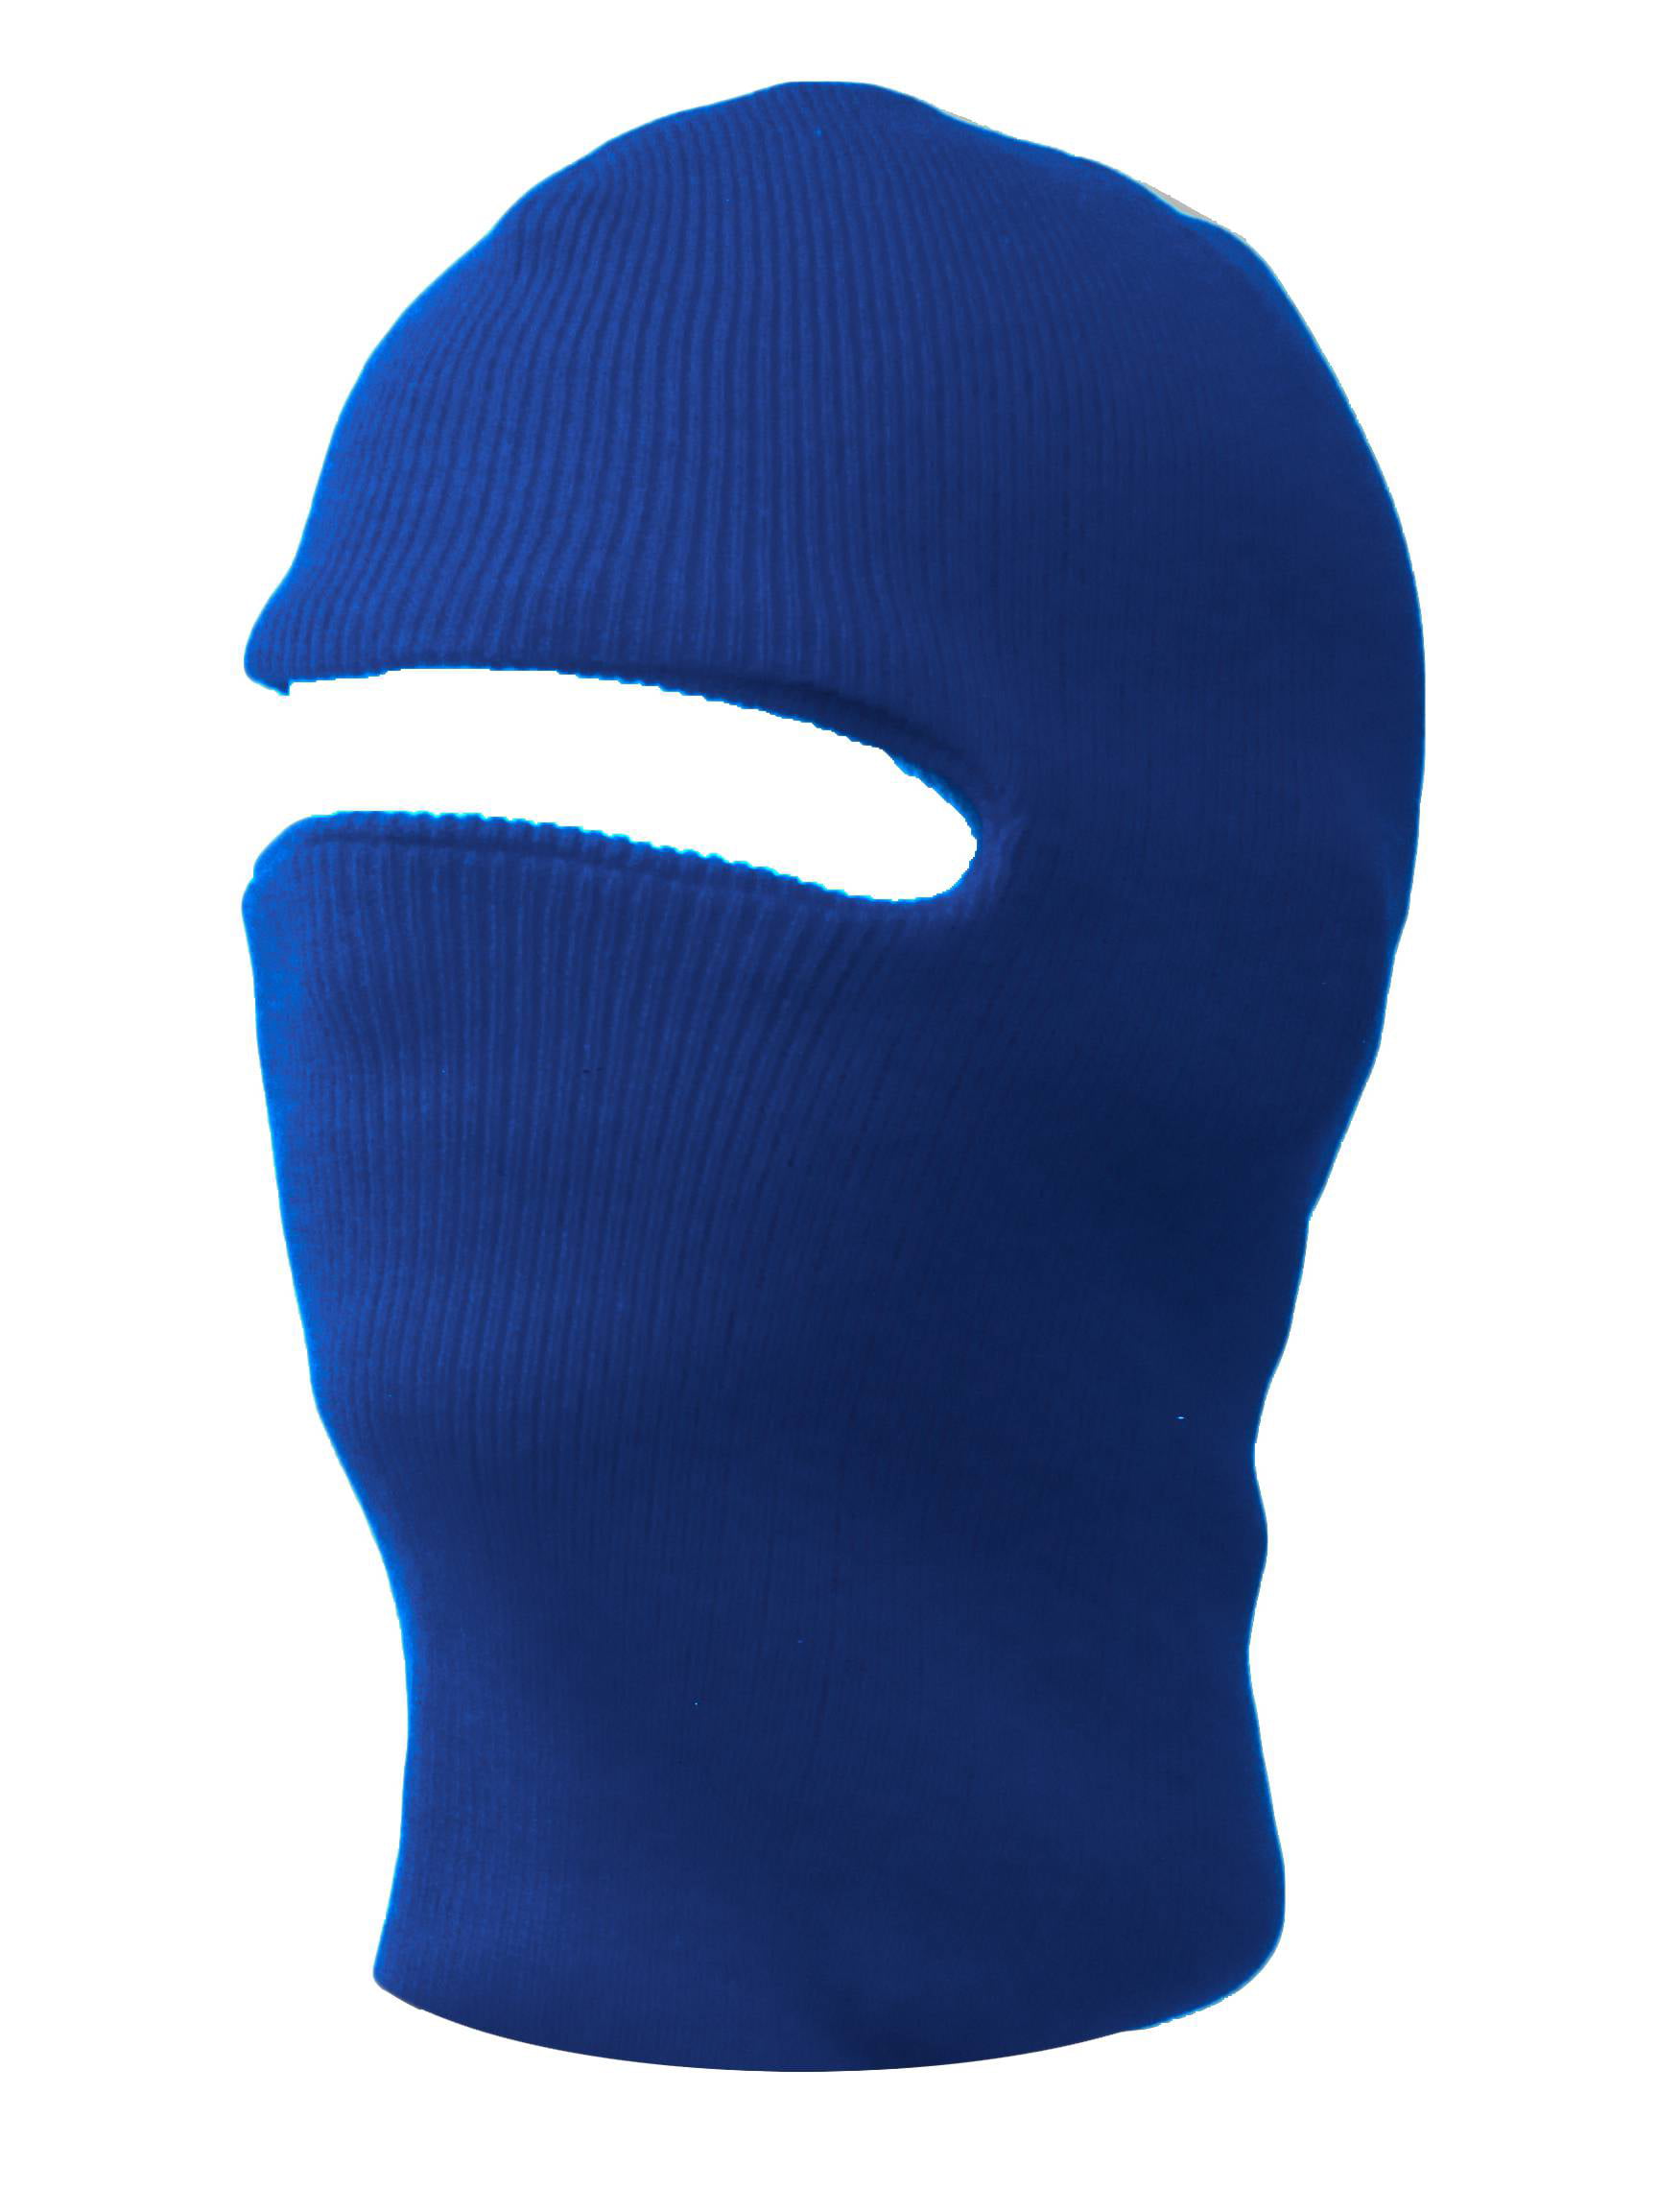 New Royal Blue One Holed Ski Face Mask - Walmart.com